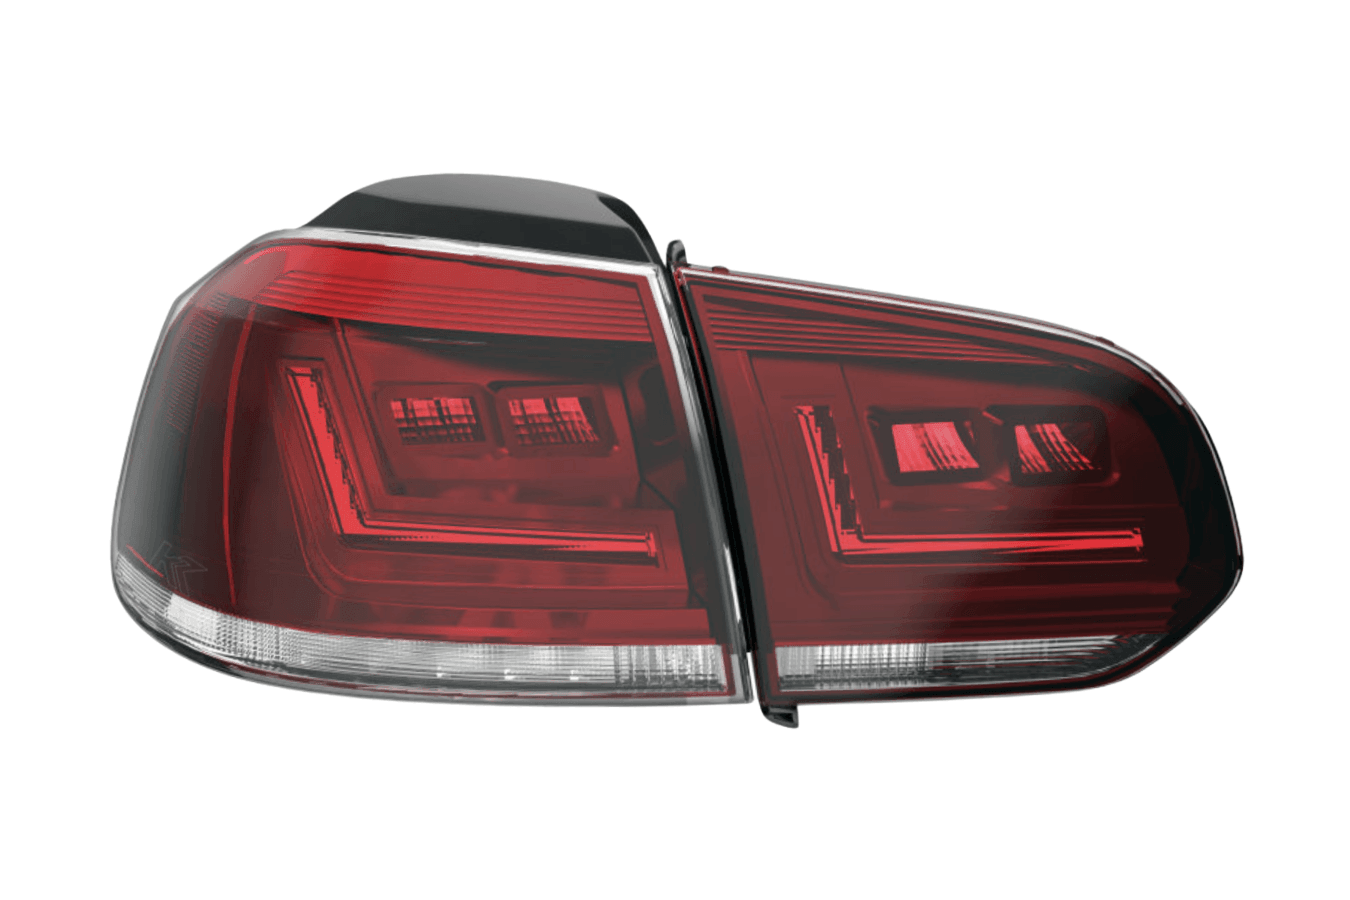 OSRAM LEDriving® VW Golf 6 VI LED taillights Black Edition (2008-2014) - K2 Industries